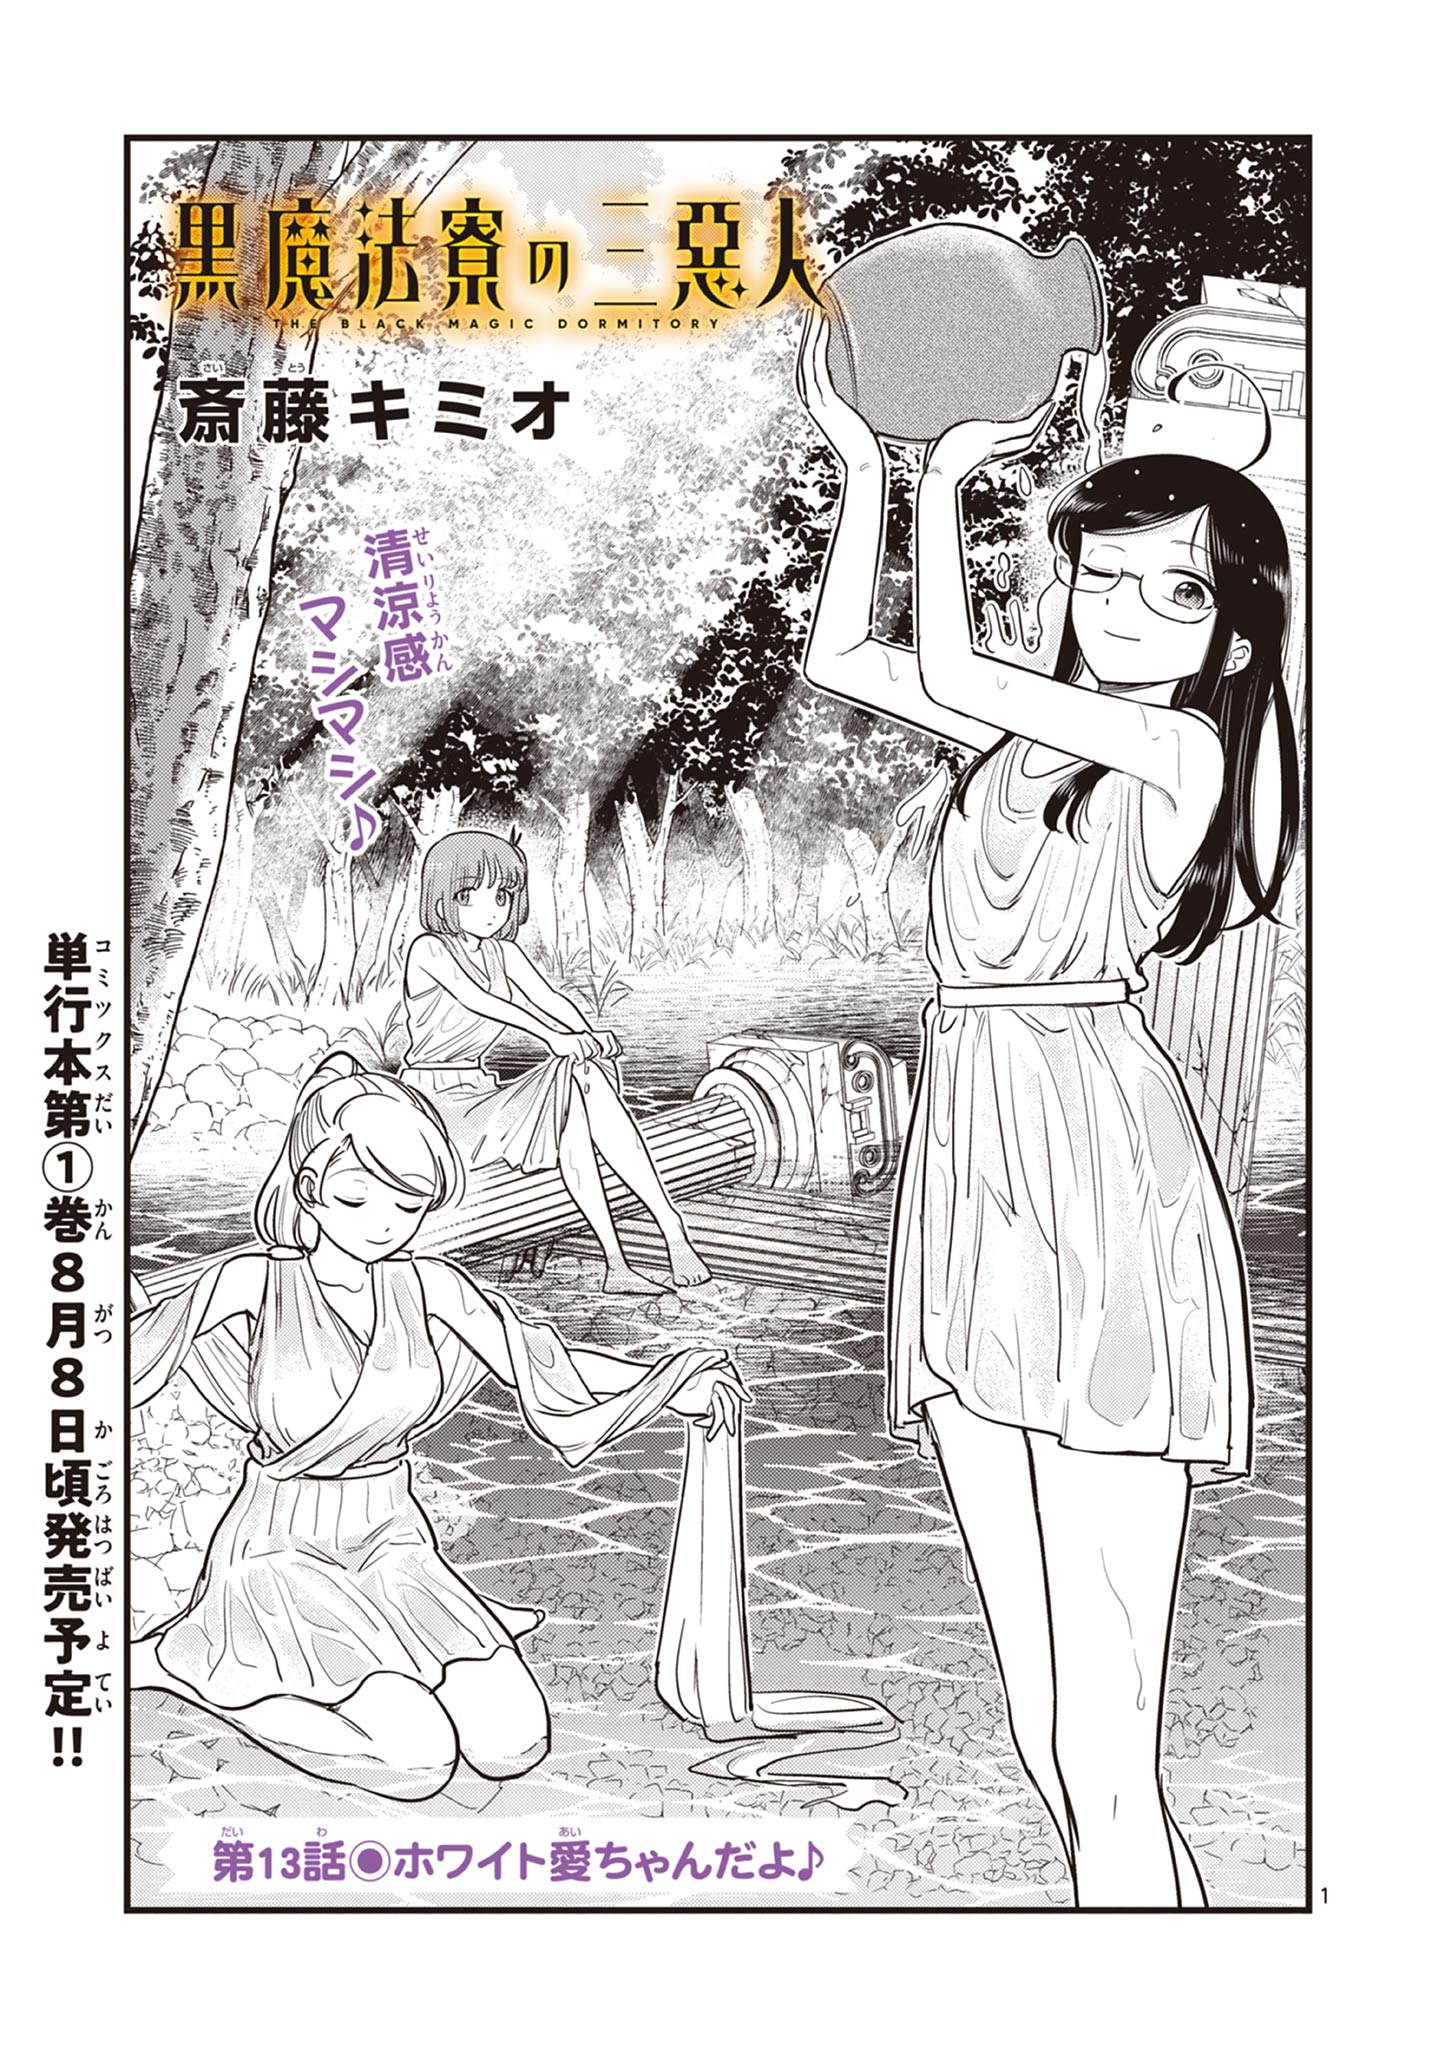 Kuro Mahou Ryou no Sanakunin - Chapter 13 - Page 1